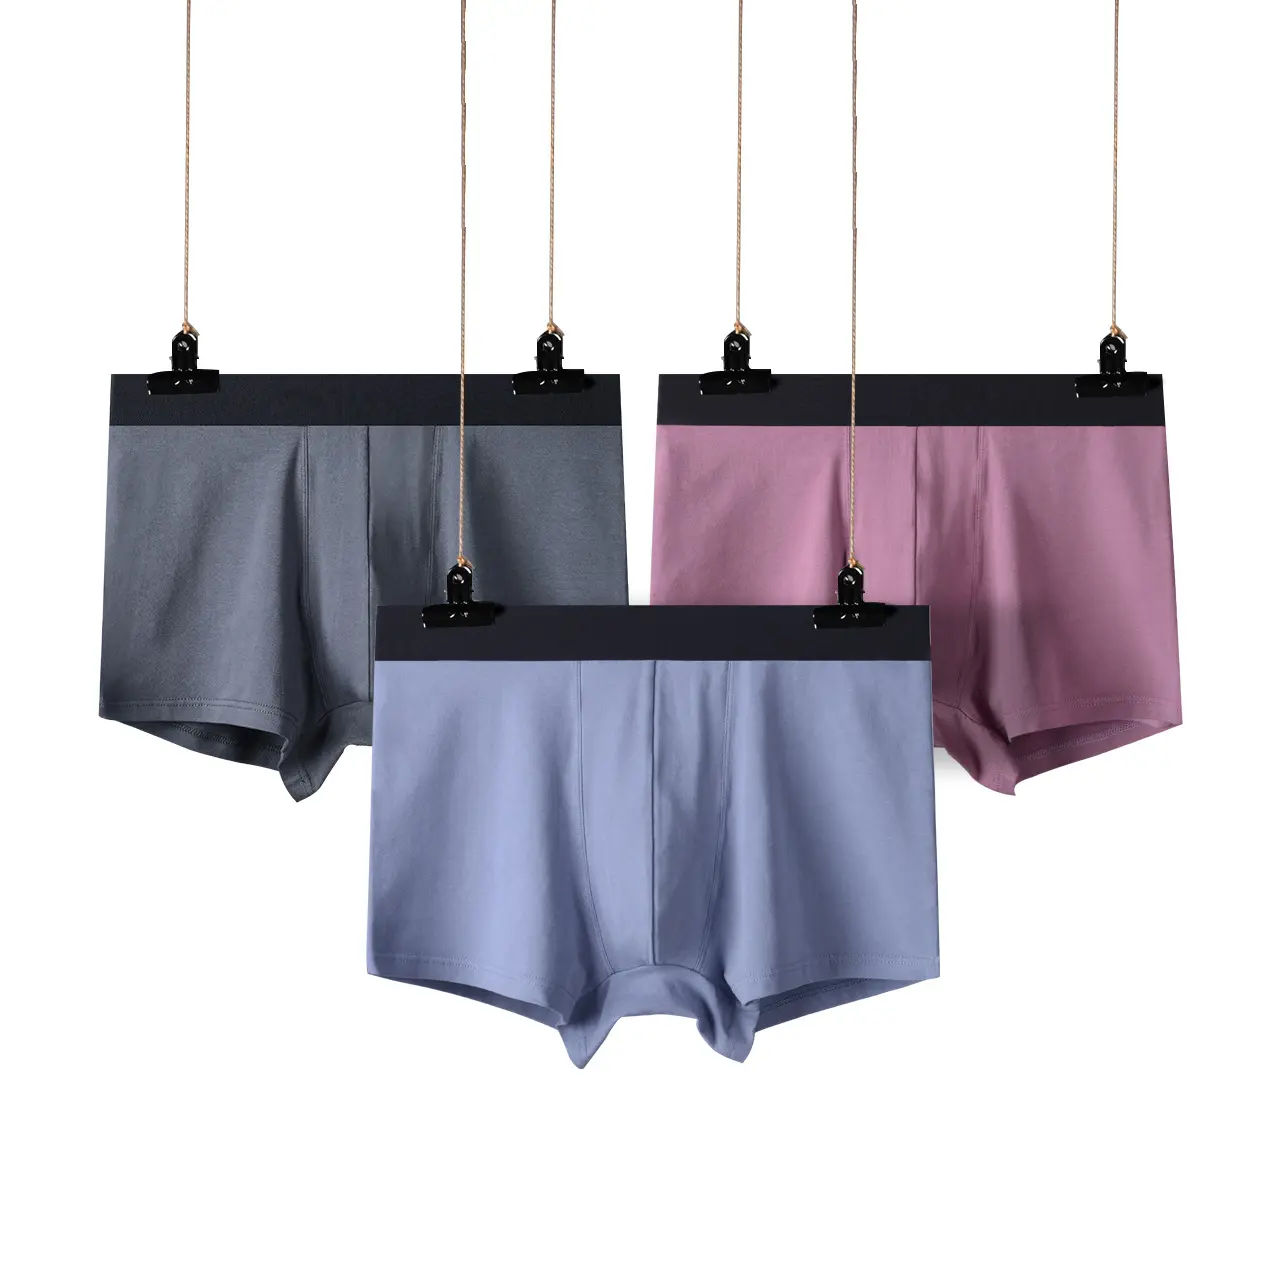 Plus Size Solid Color Mid Waist Men Underwear Solid Color Briefs New style Black Basic Modal Boxers Briefs Underwear